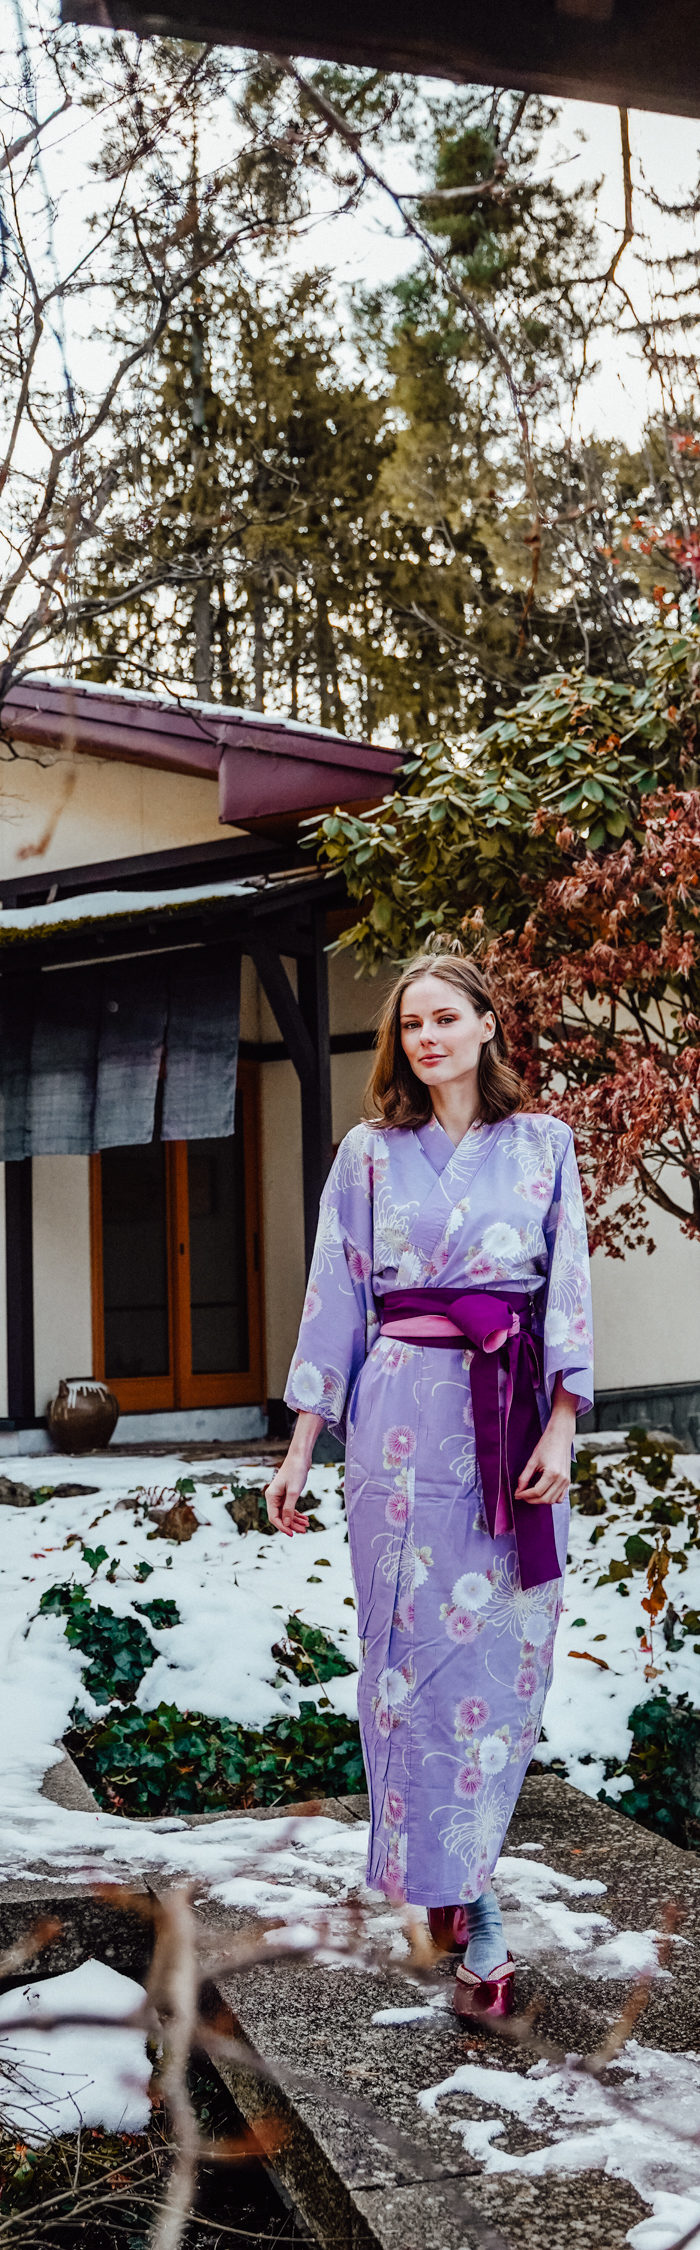 Alyssa Campanella of The A List blog visits Kourakuen ryokan in Hokkaido, Japan